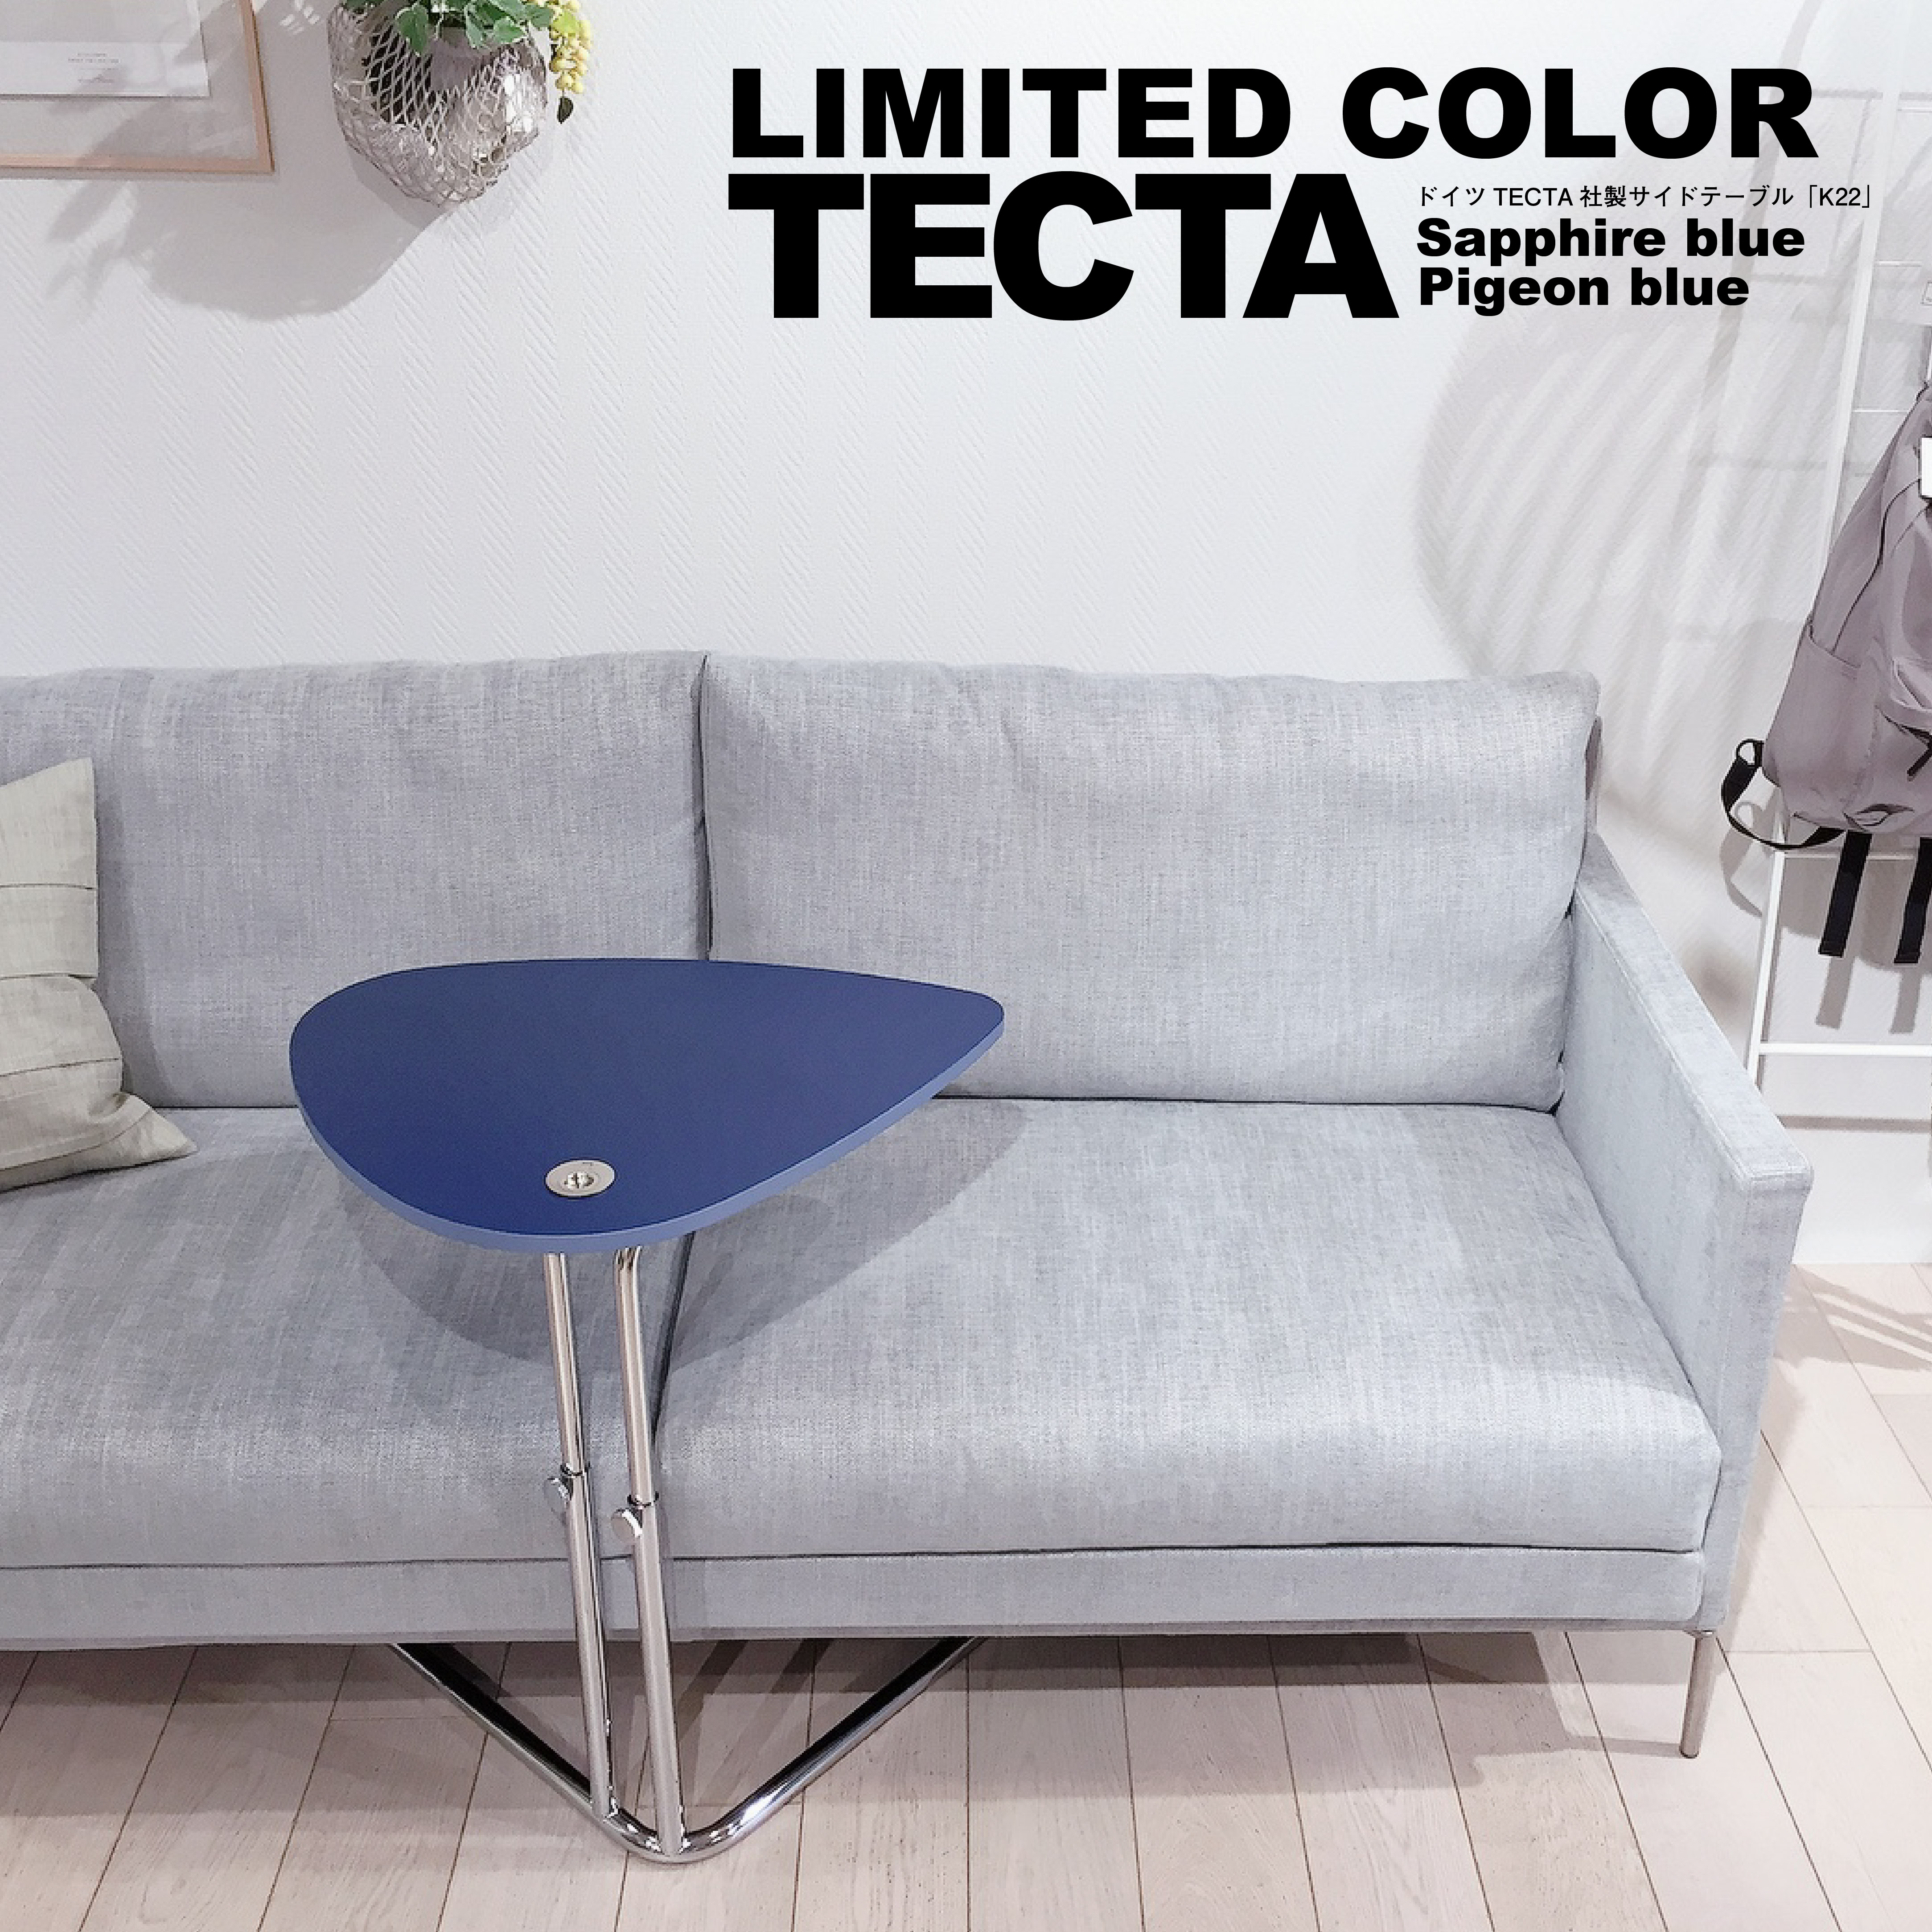 TECTA K22サイドテーブル inZONE限定カラー6/1発売 | 札幌の家具 